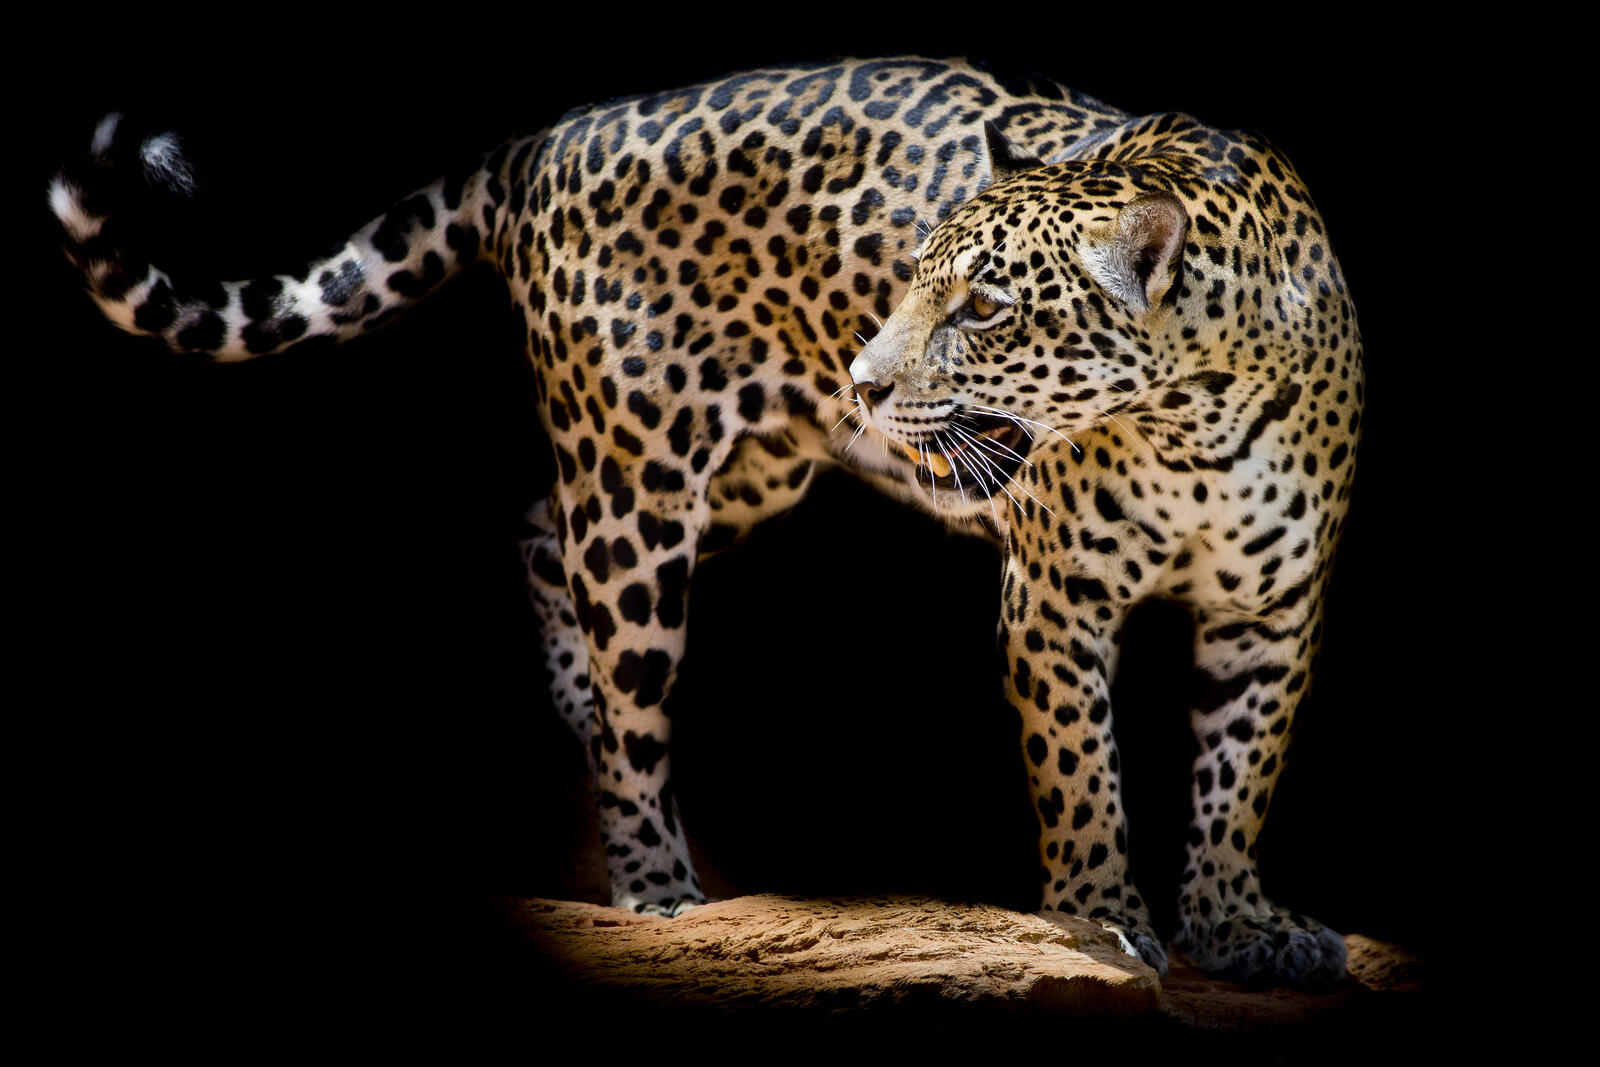 Wallpapers close-up predatory cat Leopard portrait on the desktop